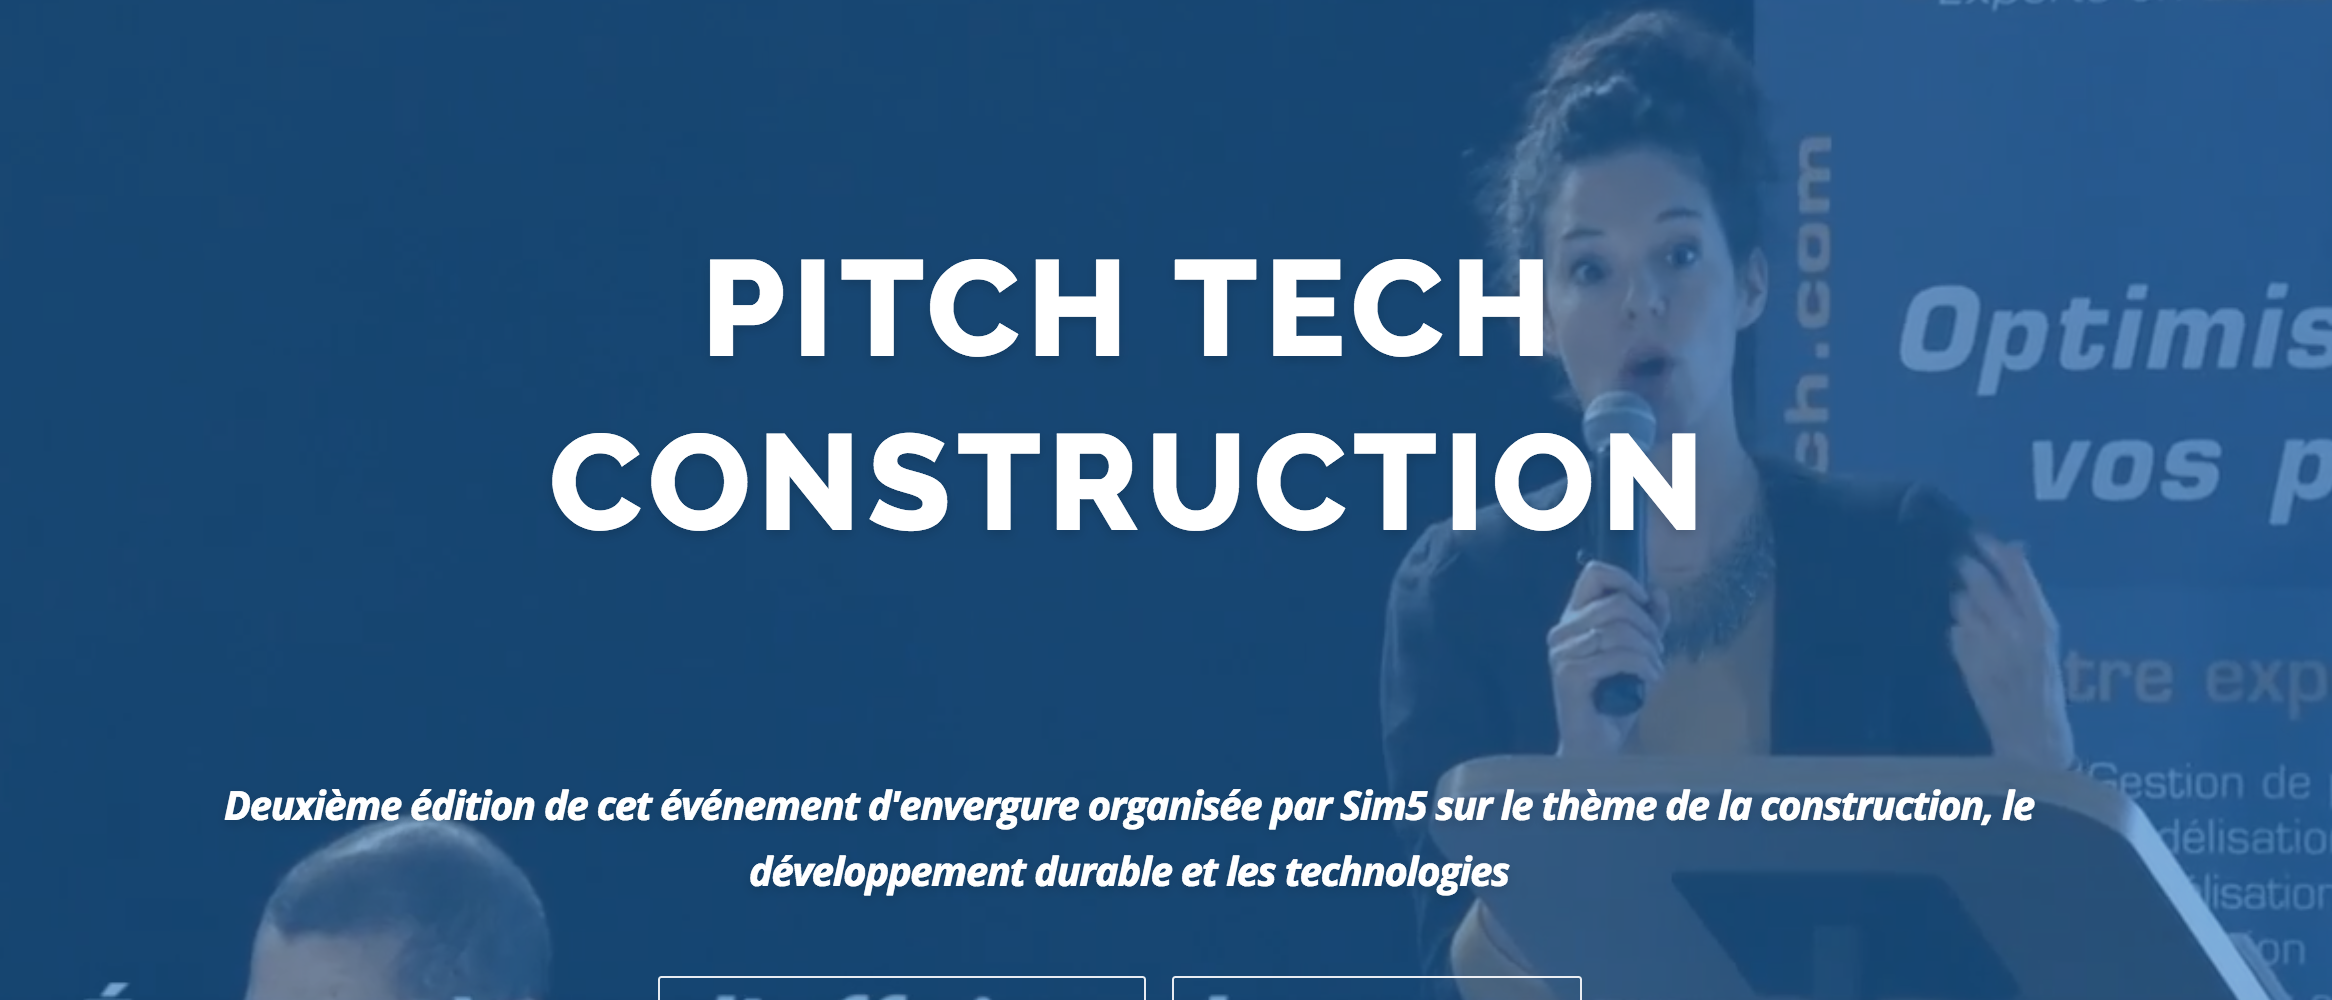 pitch tech batimatech montreal